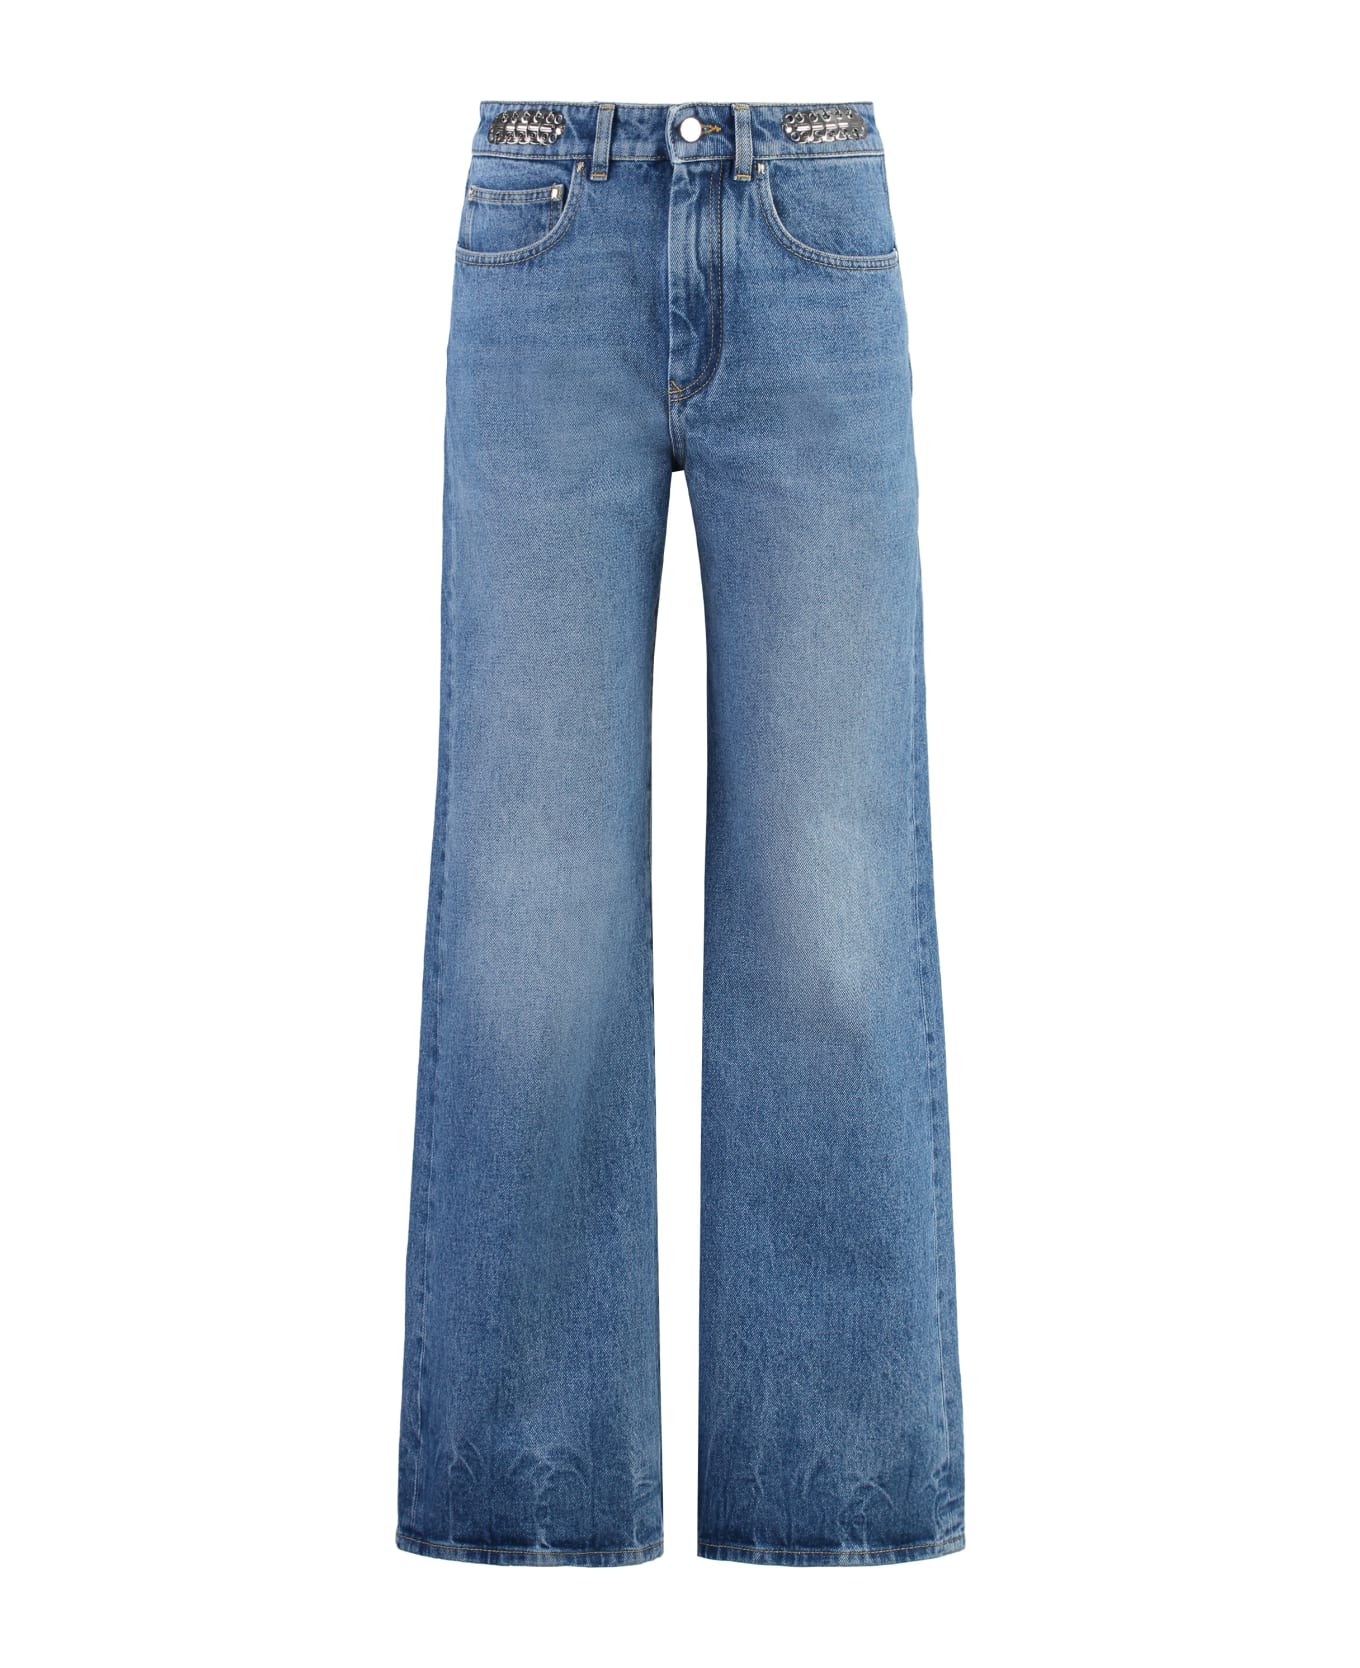 Paco Rabanne 5-pocket Straight-leg Jeans - Blue デニム